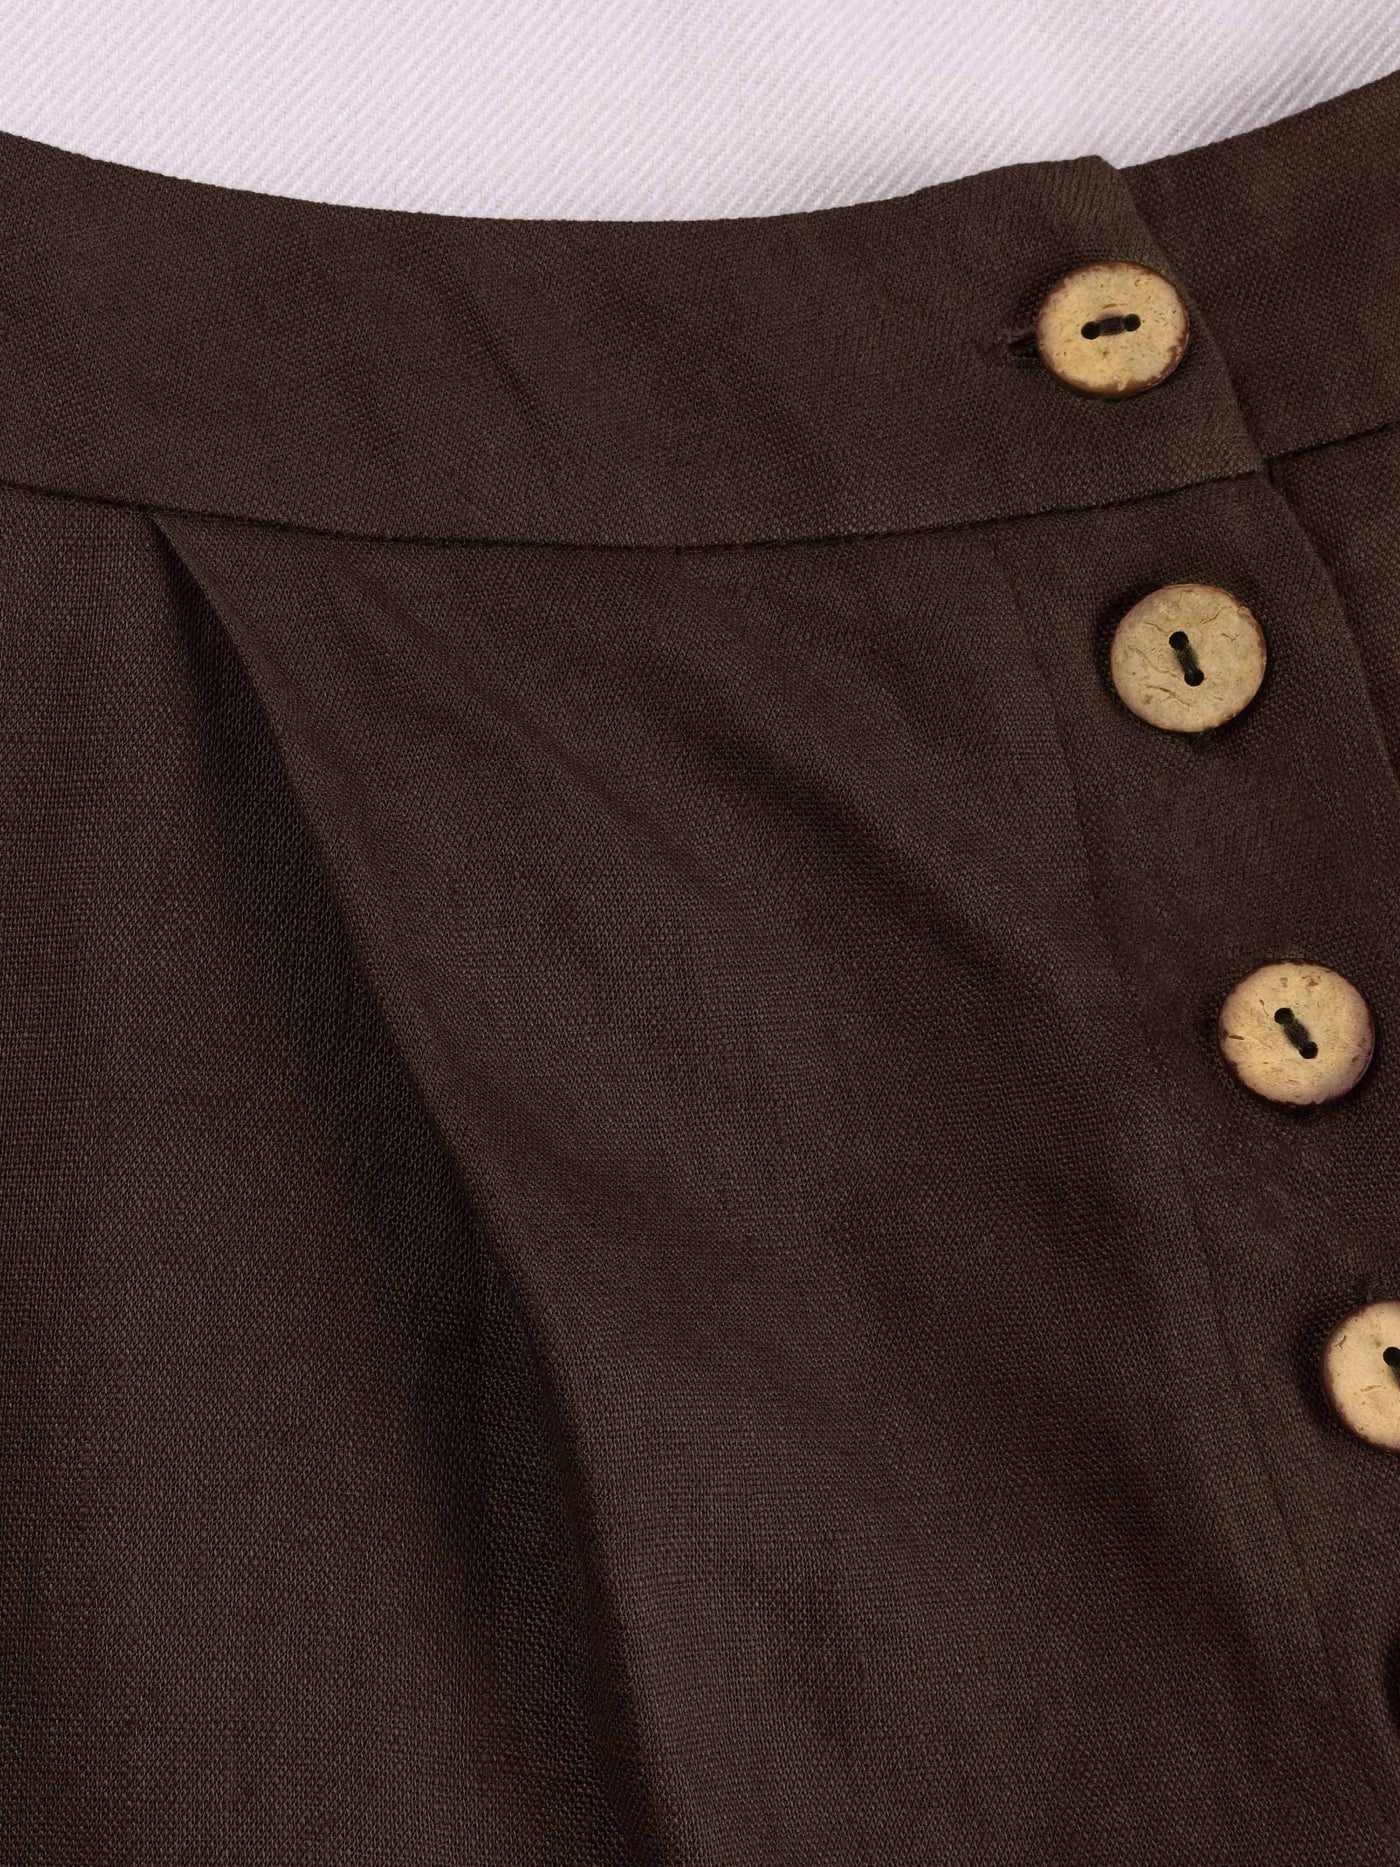 Thalia 100% Linen Button-Fly Palazzo Pants